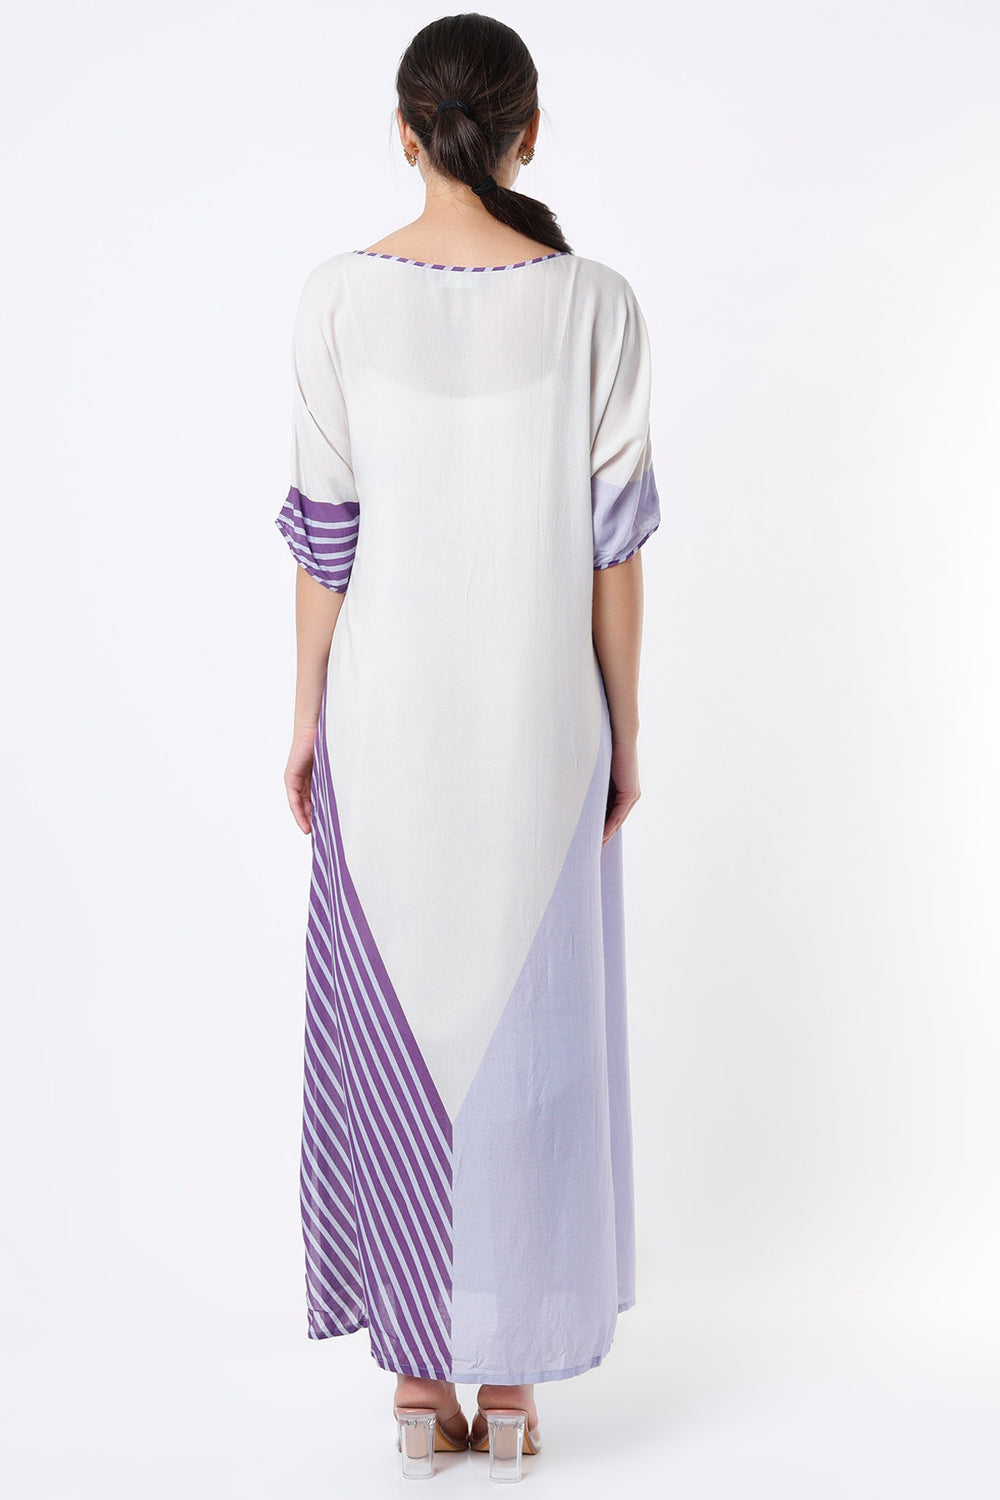 Silk White Printed Dress With Slip